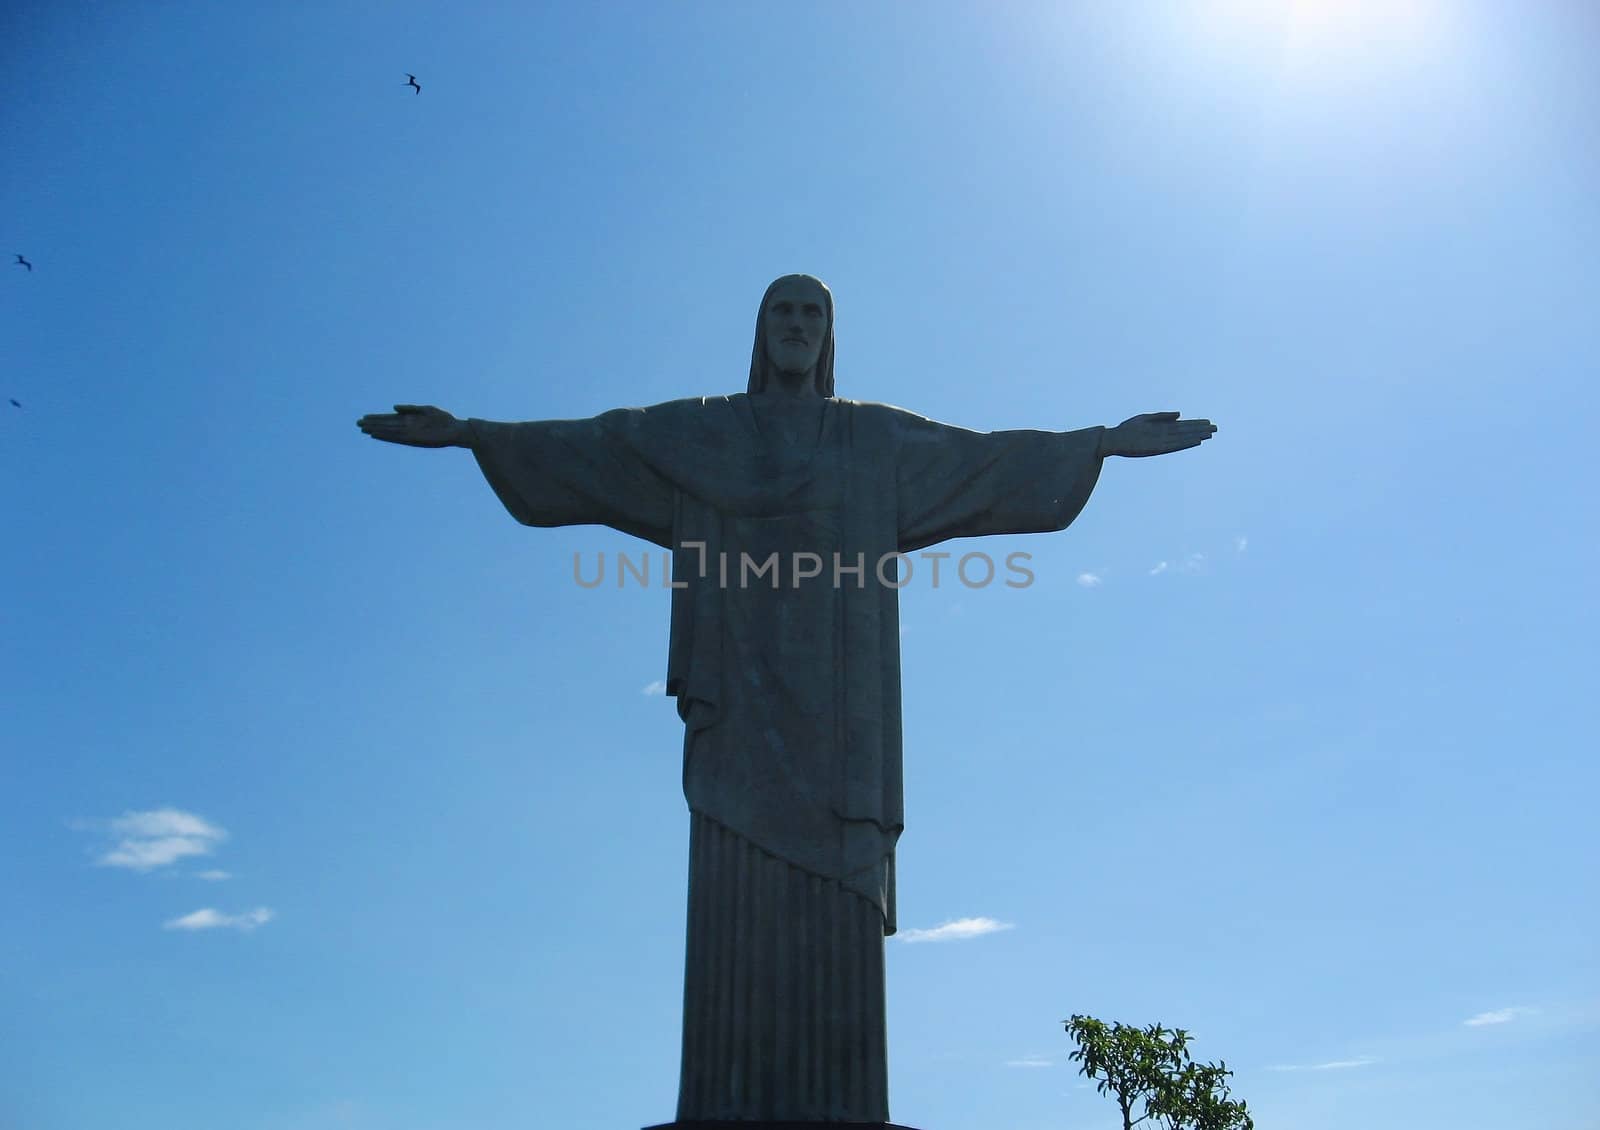 Corcovado Statue of Christ by bellafotosolo